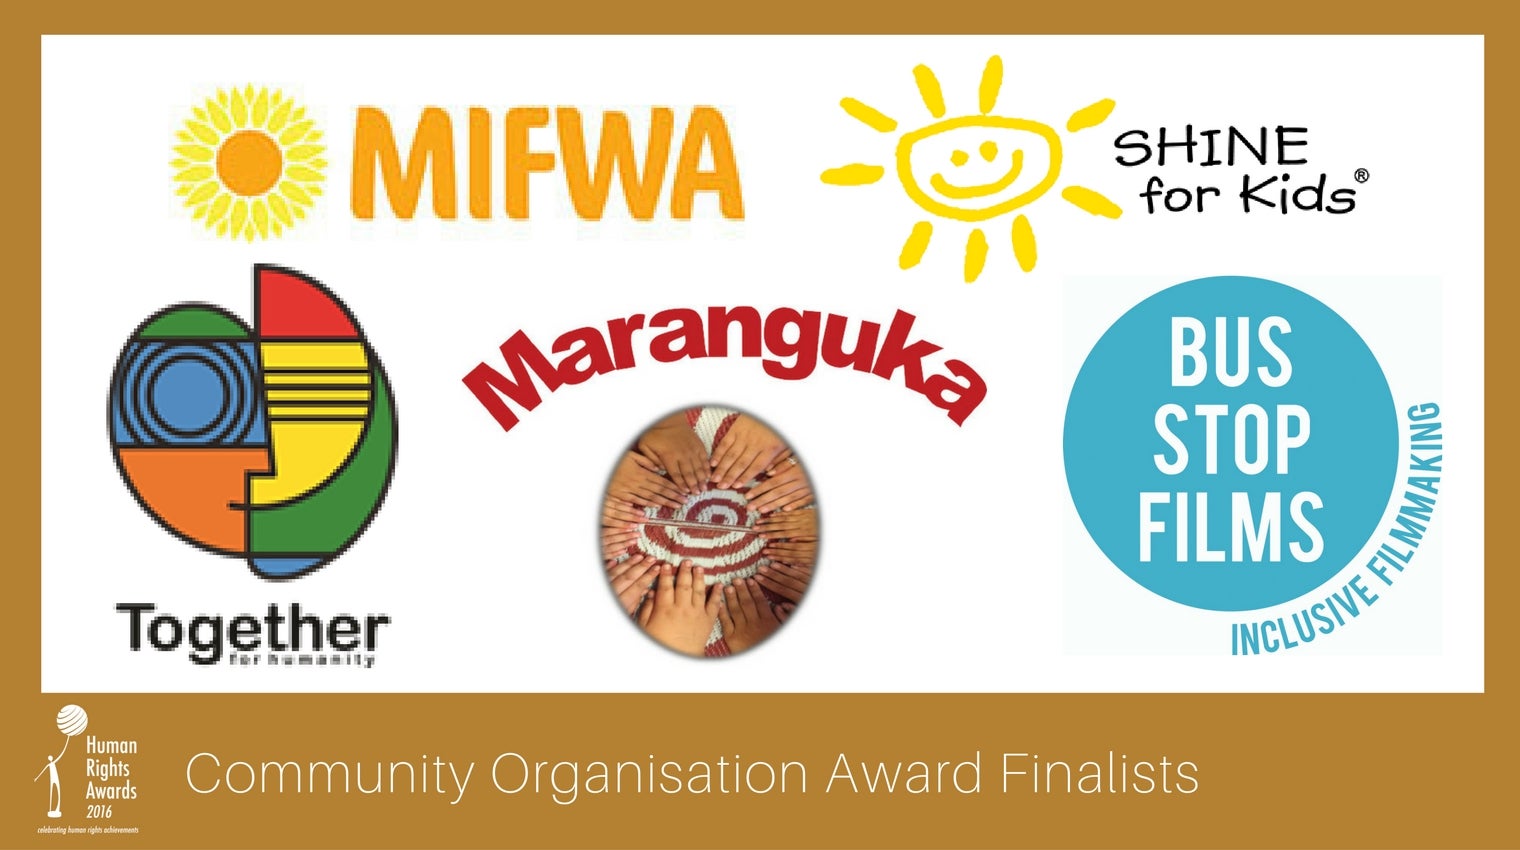 Composite of Community Organisation Award finalist logos